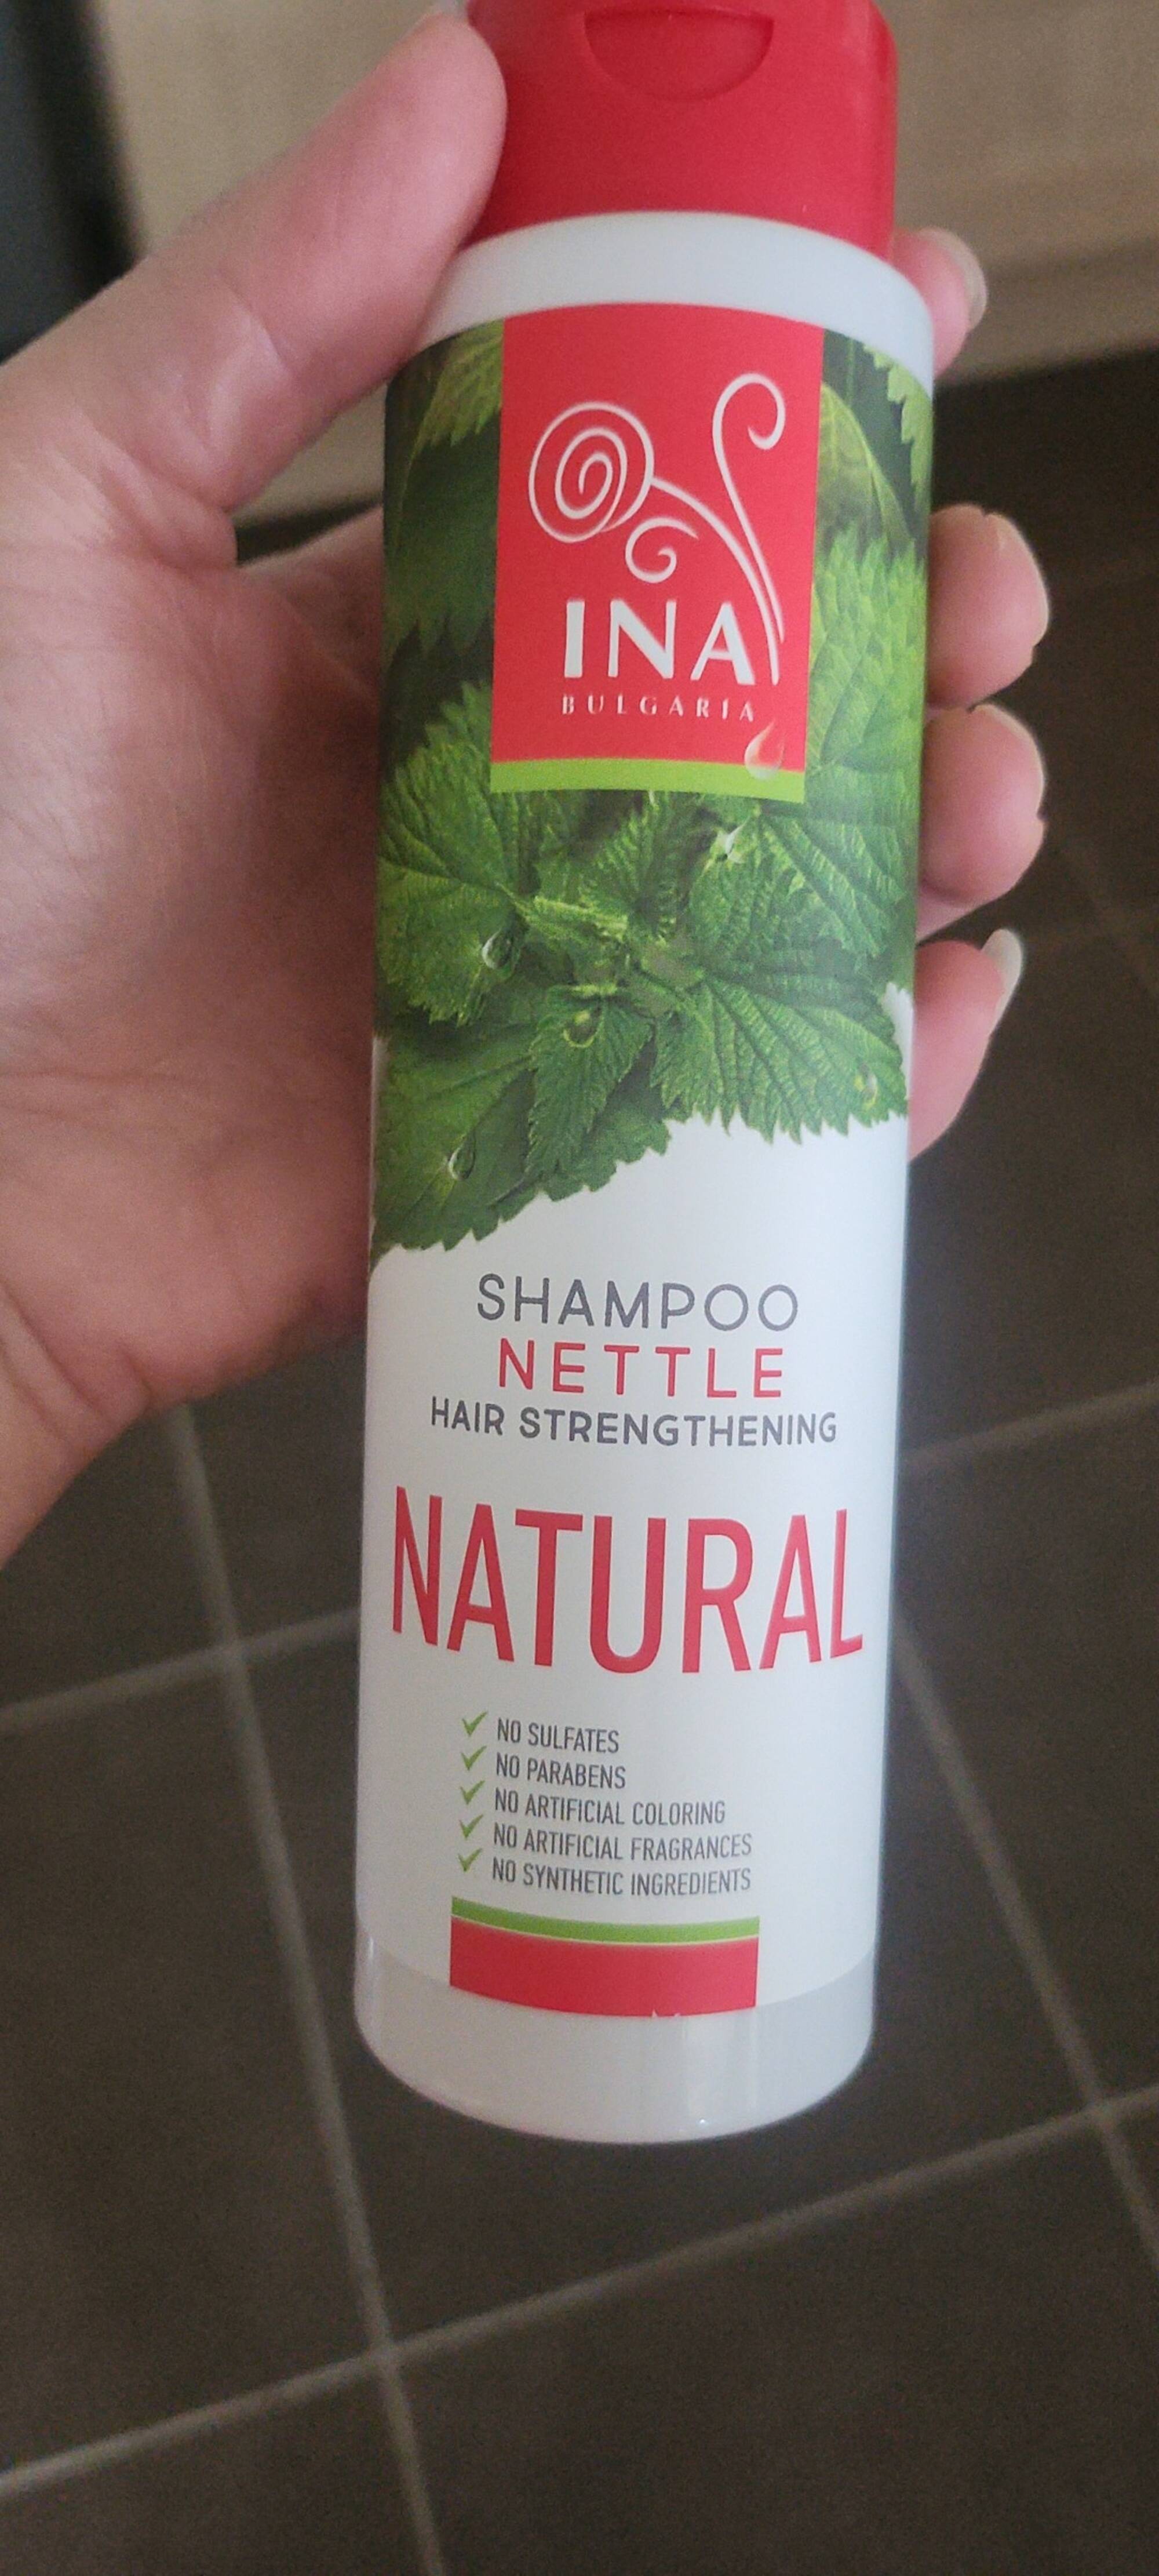 INA BULGARIA - Shampoo nettle natural